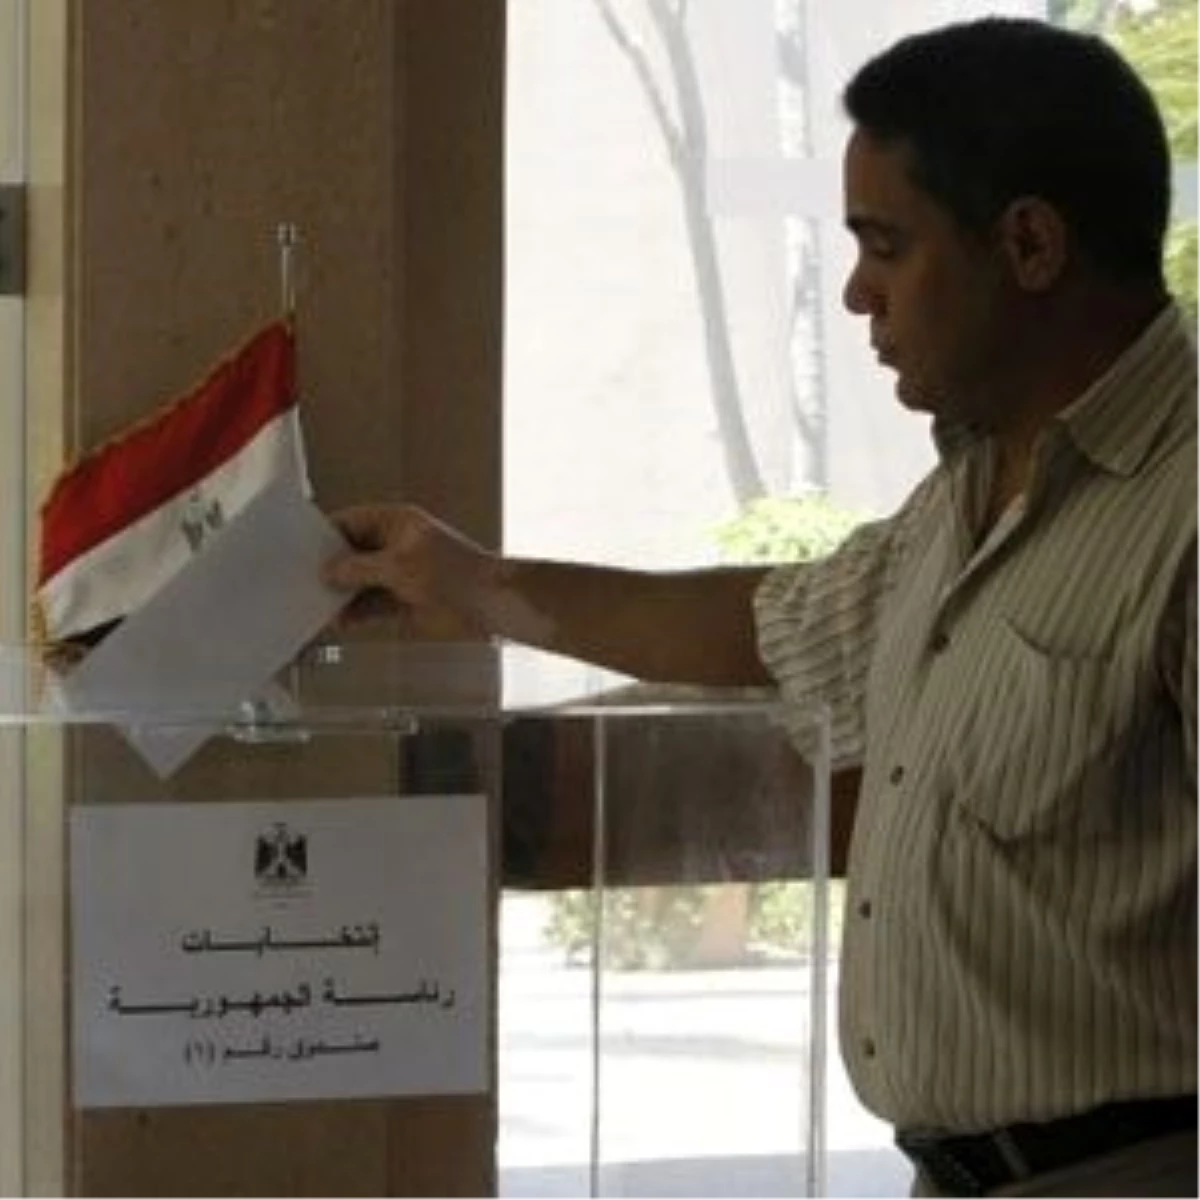 Mısır Cumhurbaşkanlığı Seçim Sonuçları